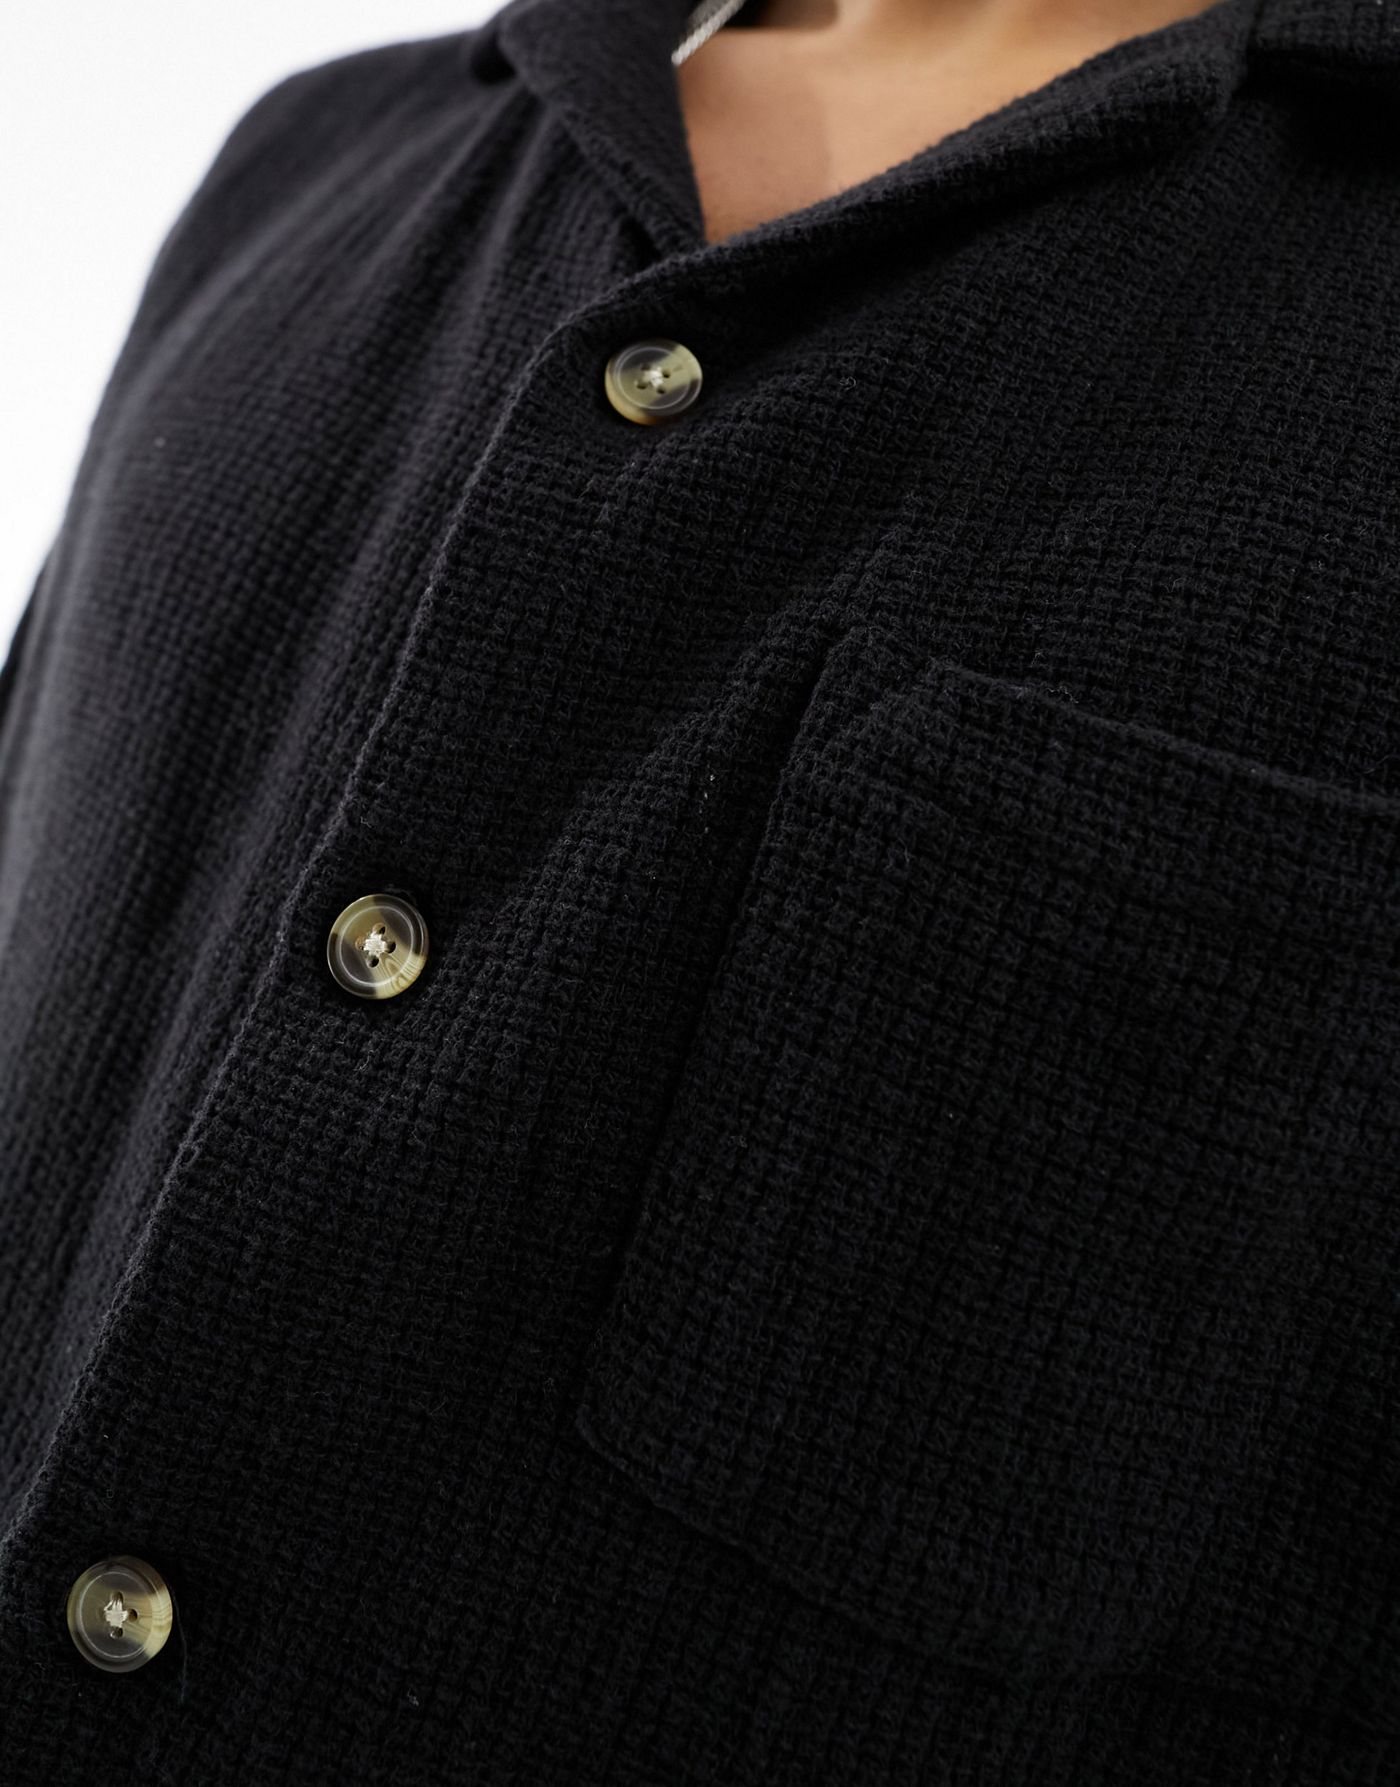 Cotton:On Palma short sleeve shirt in black